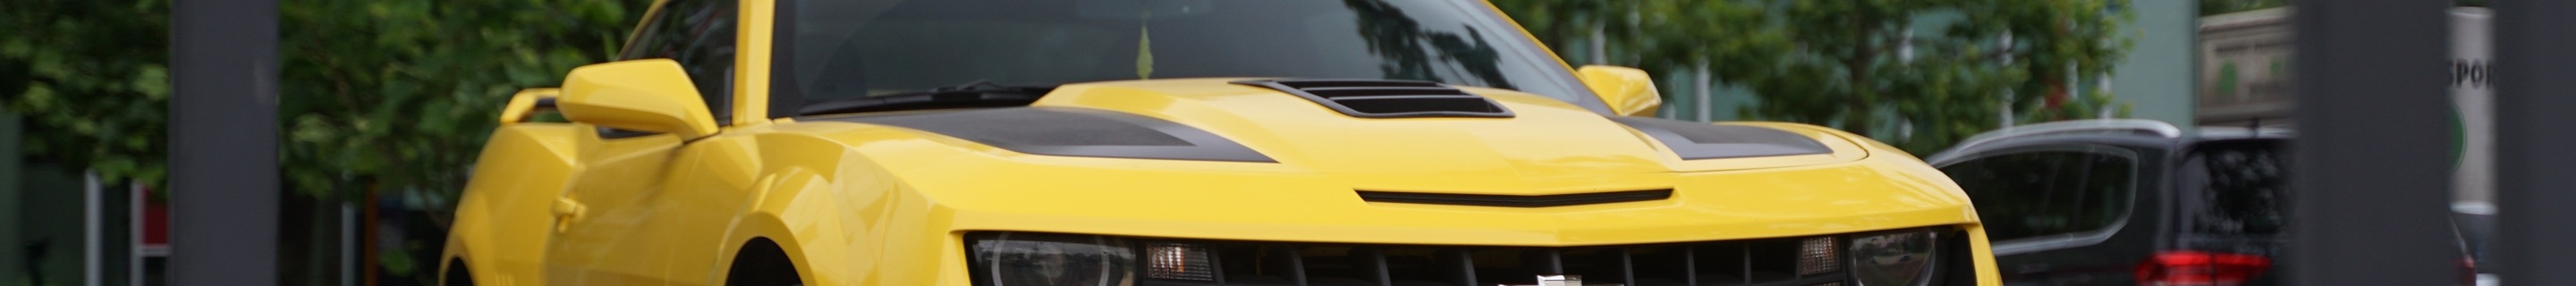 Chevrolet Camaro SS Transformers Edition